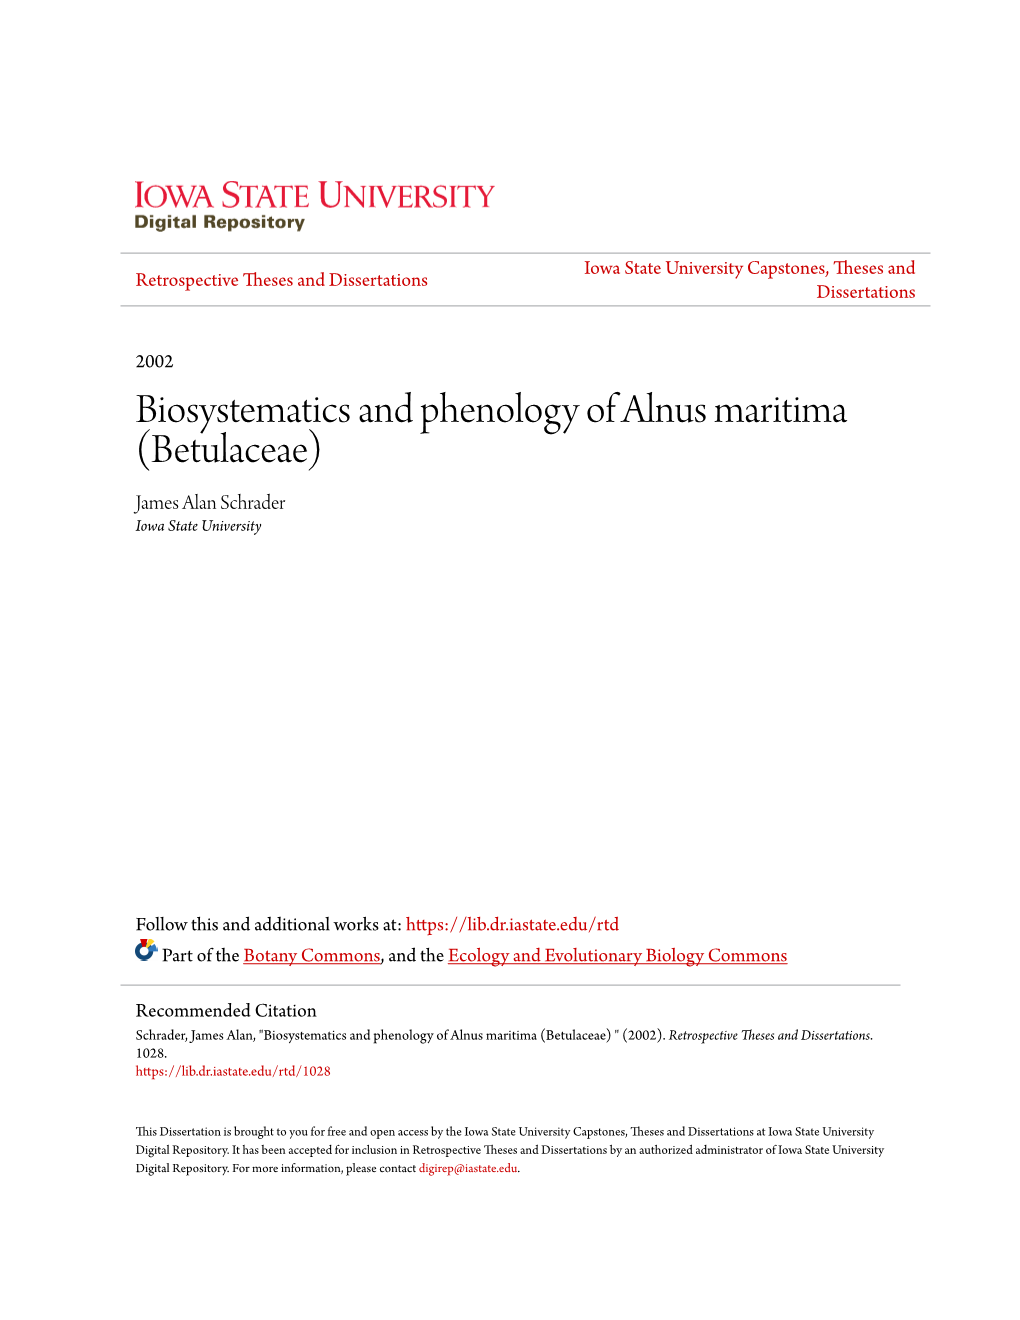 Biosystematics and Phenology of Alnus Maritima (Betulaceae) James Alan Schrader Iowa State University